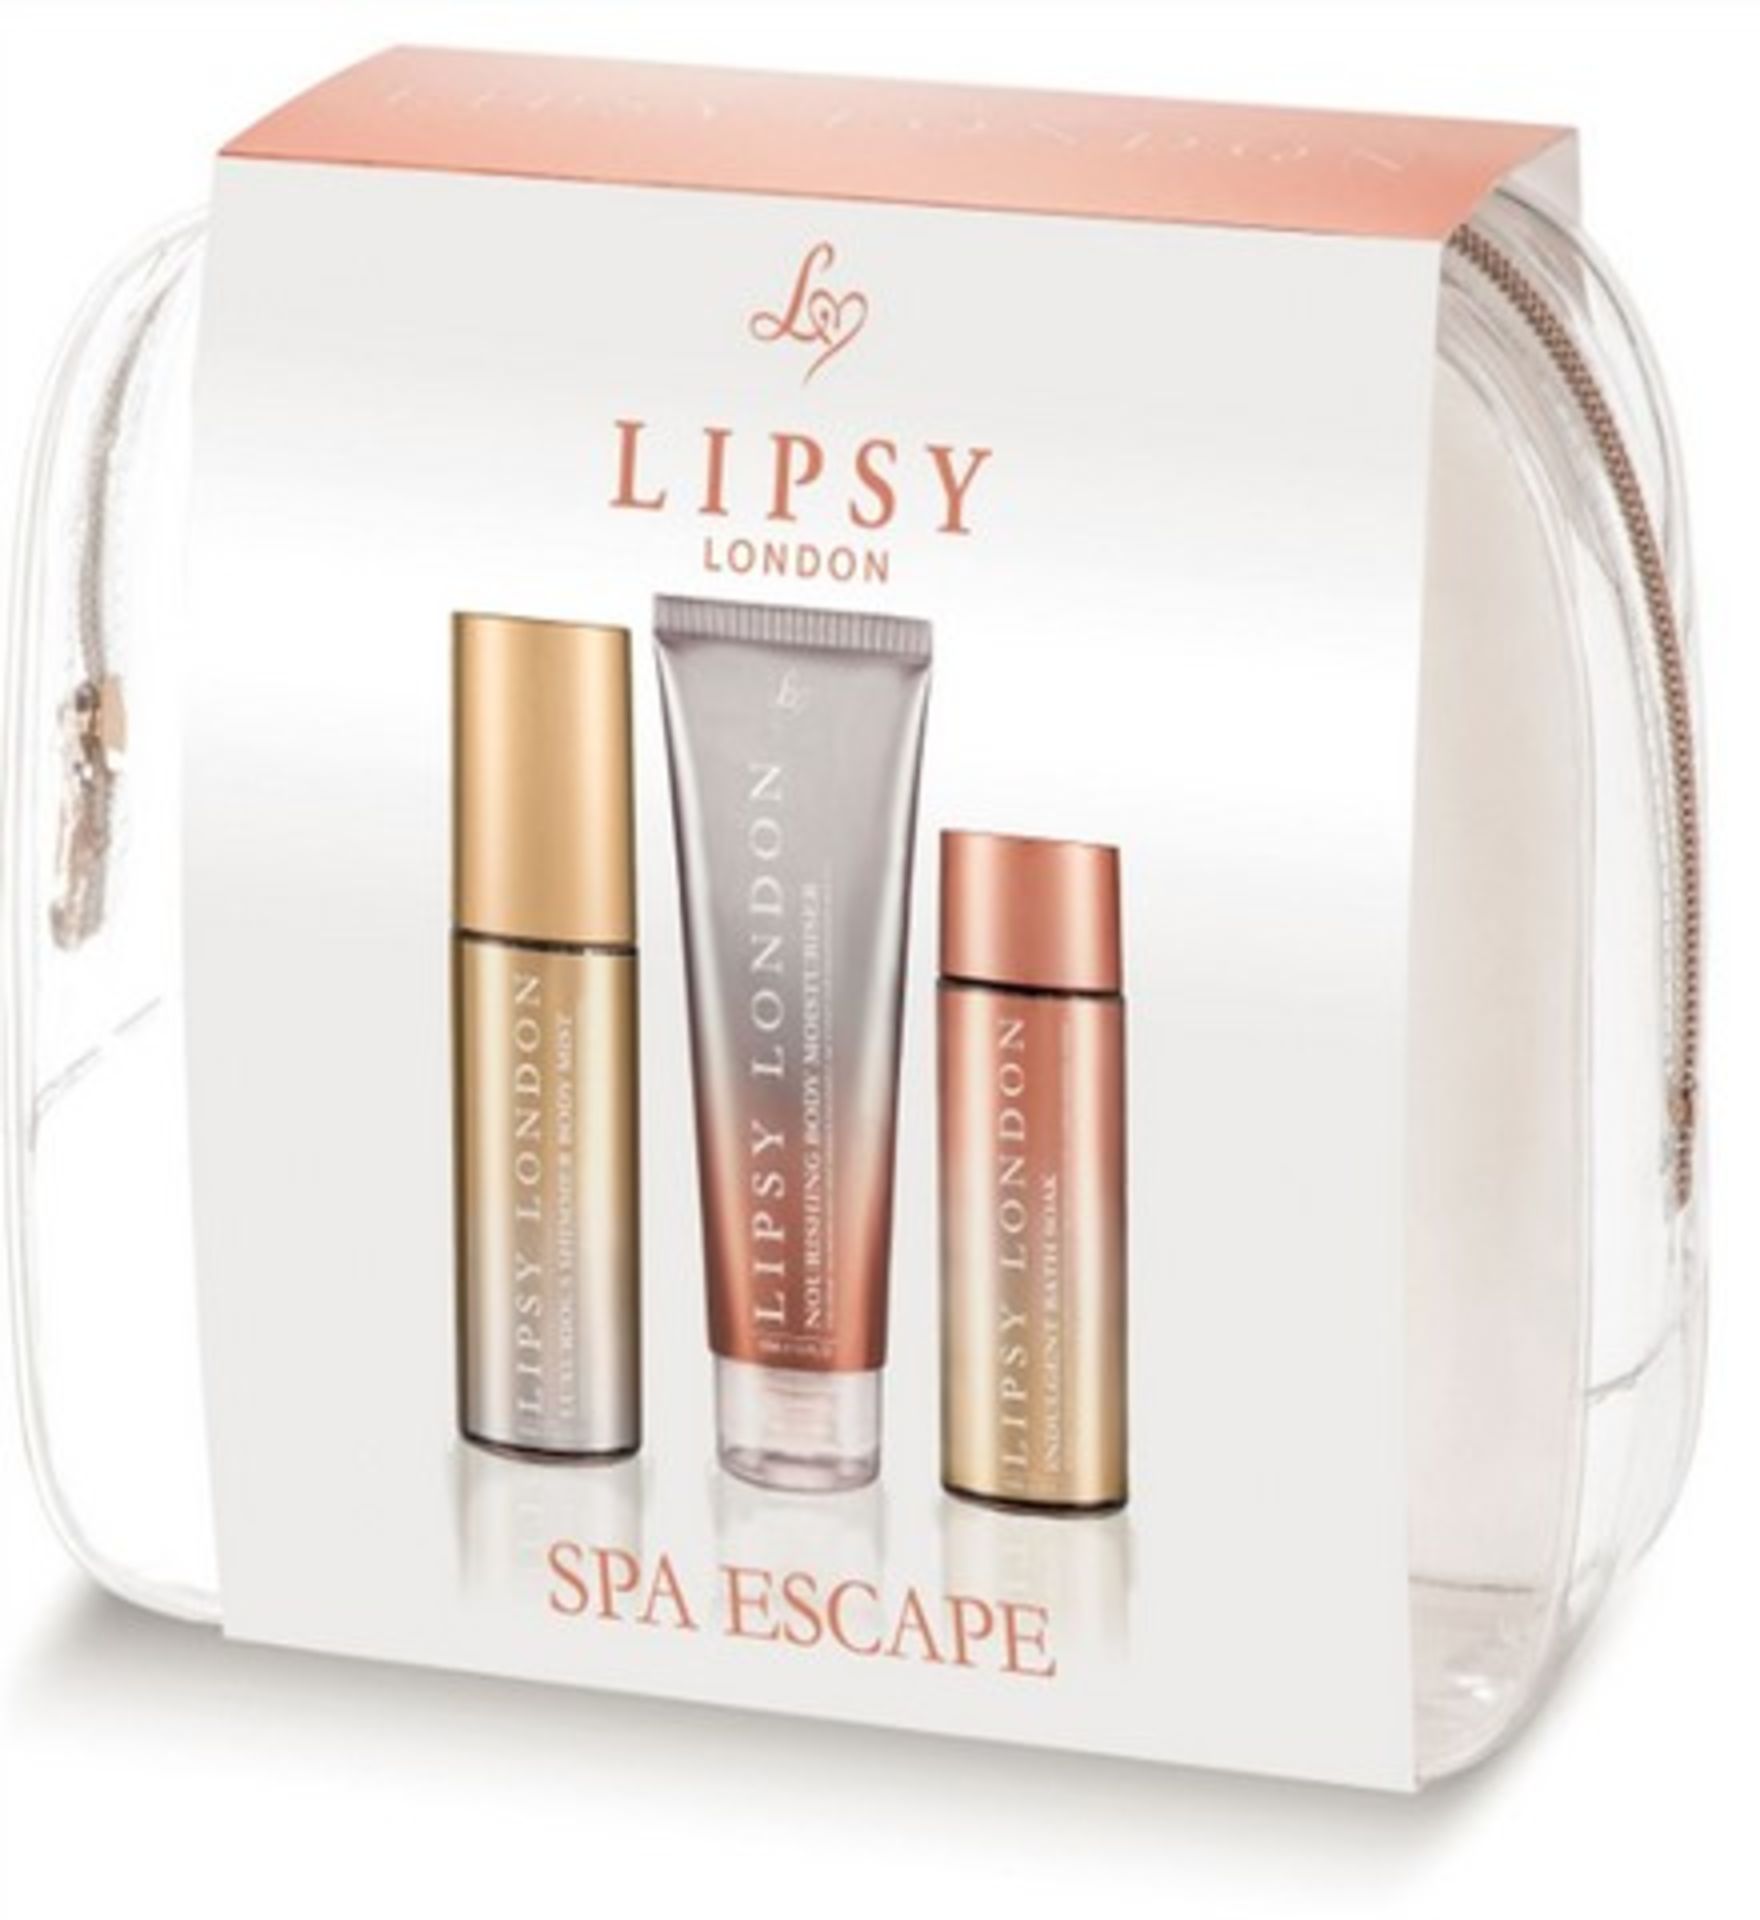 + VAT Brand New Lipsy London Spa Escape Includes Nourising Body Moisturiser (100ml) - ISP £24.00 (